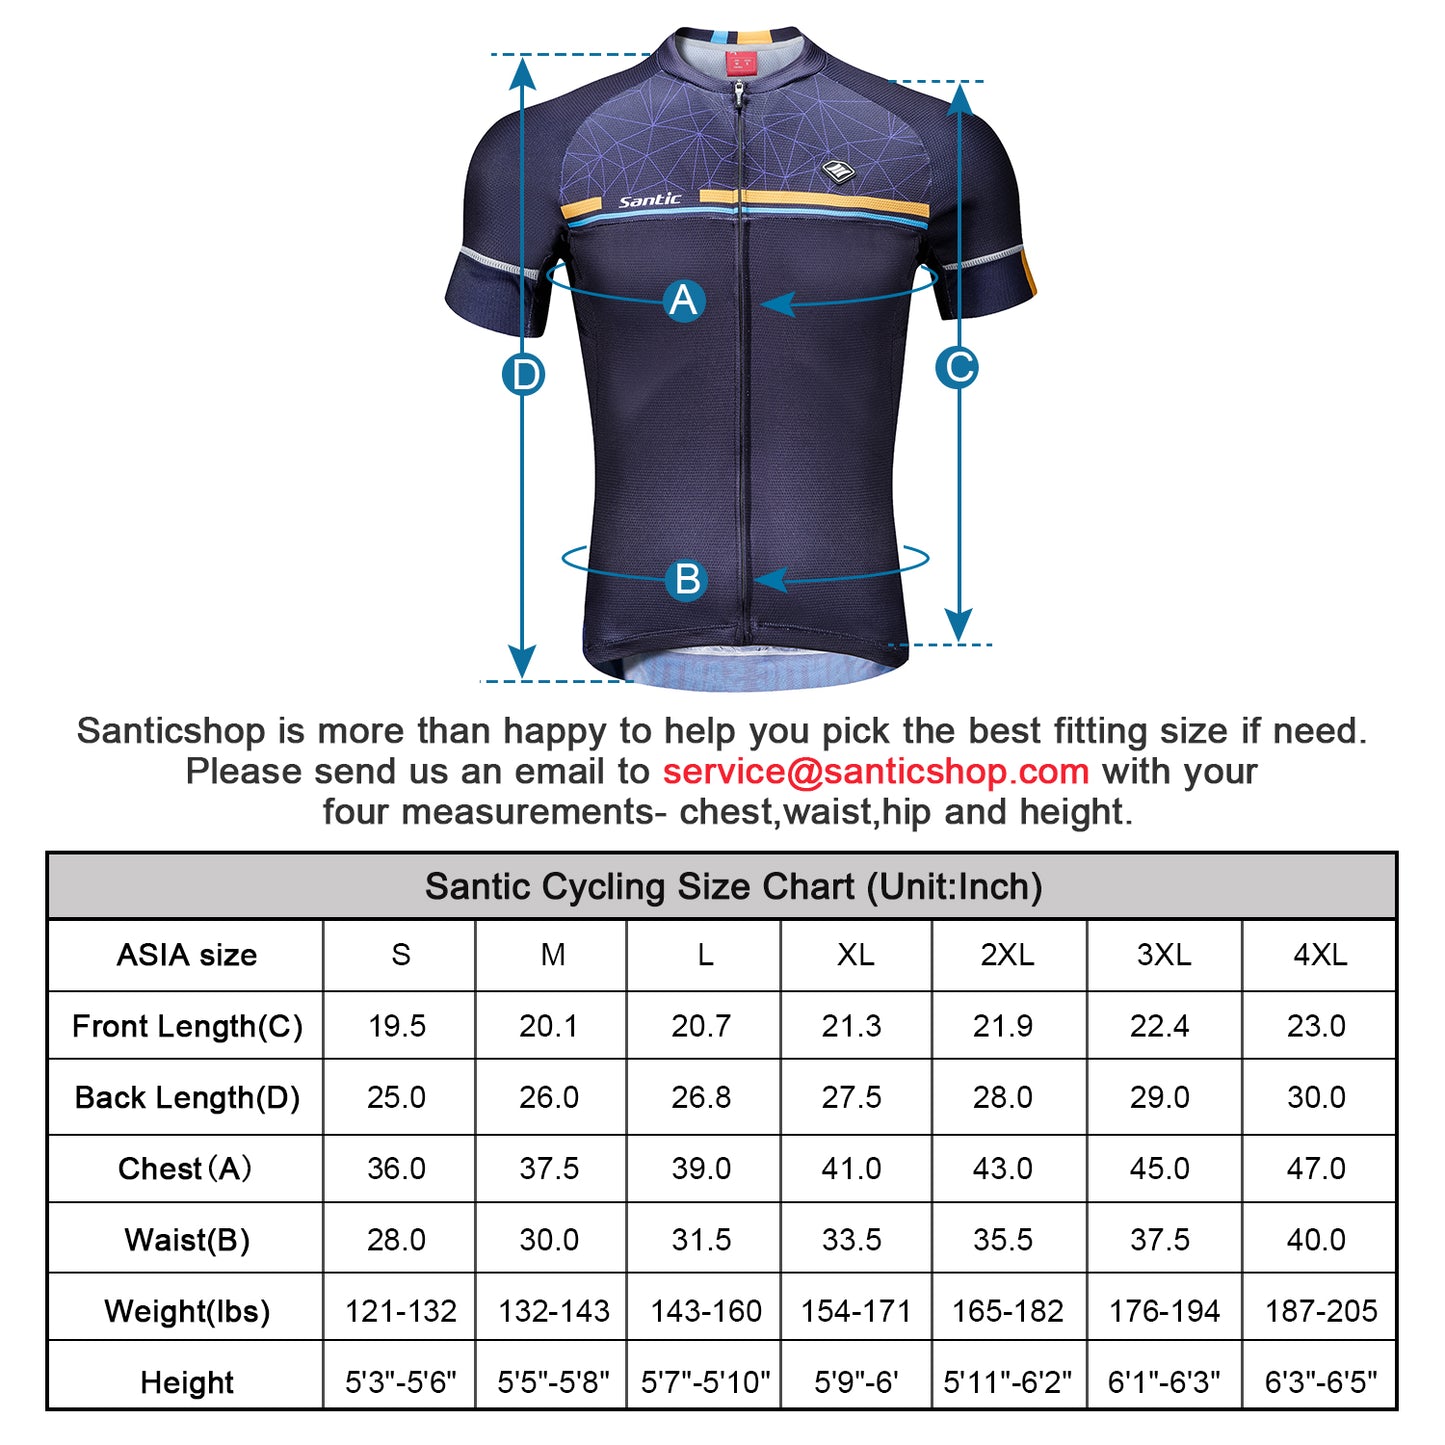 Santic Kamen Navy Men Cycling Jersey Short Sleeve